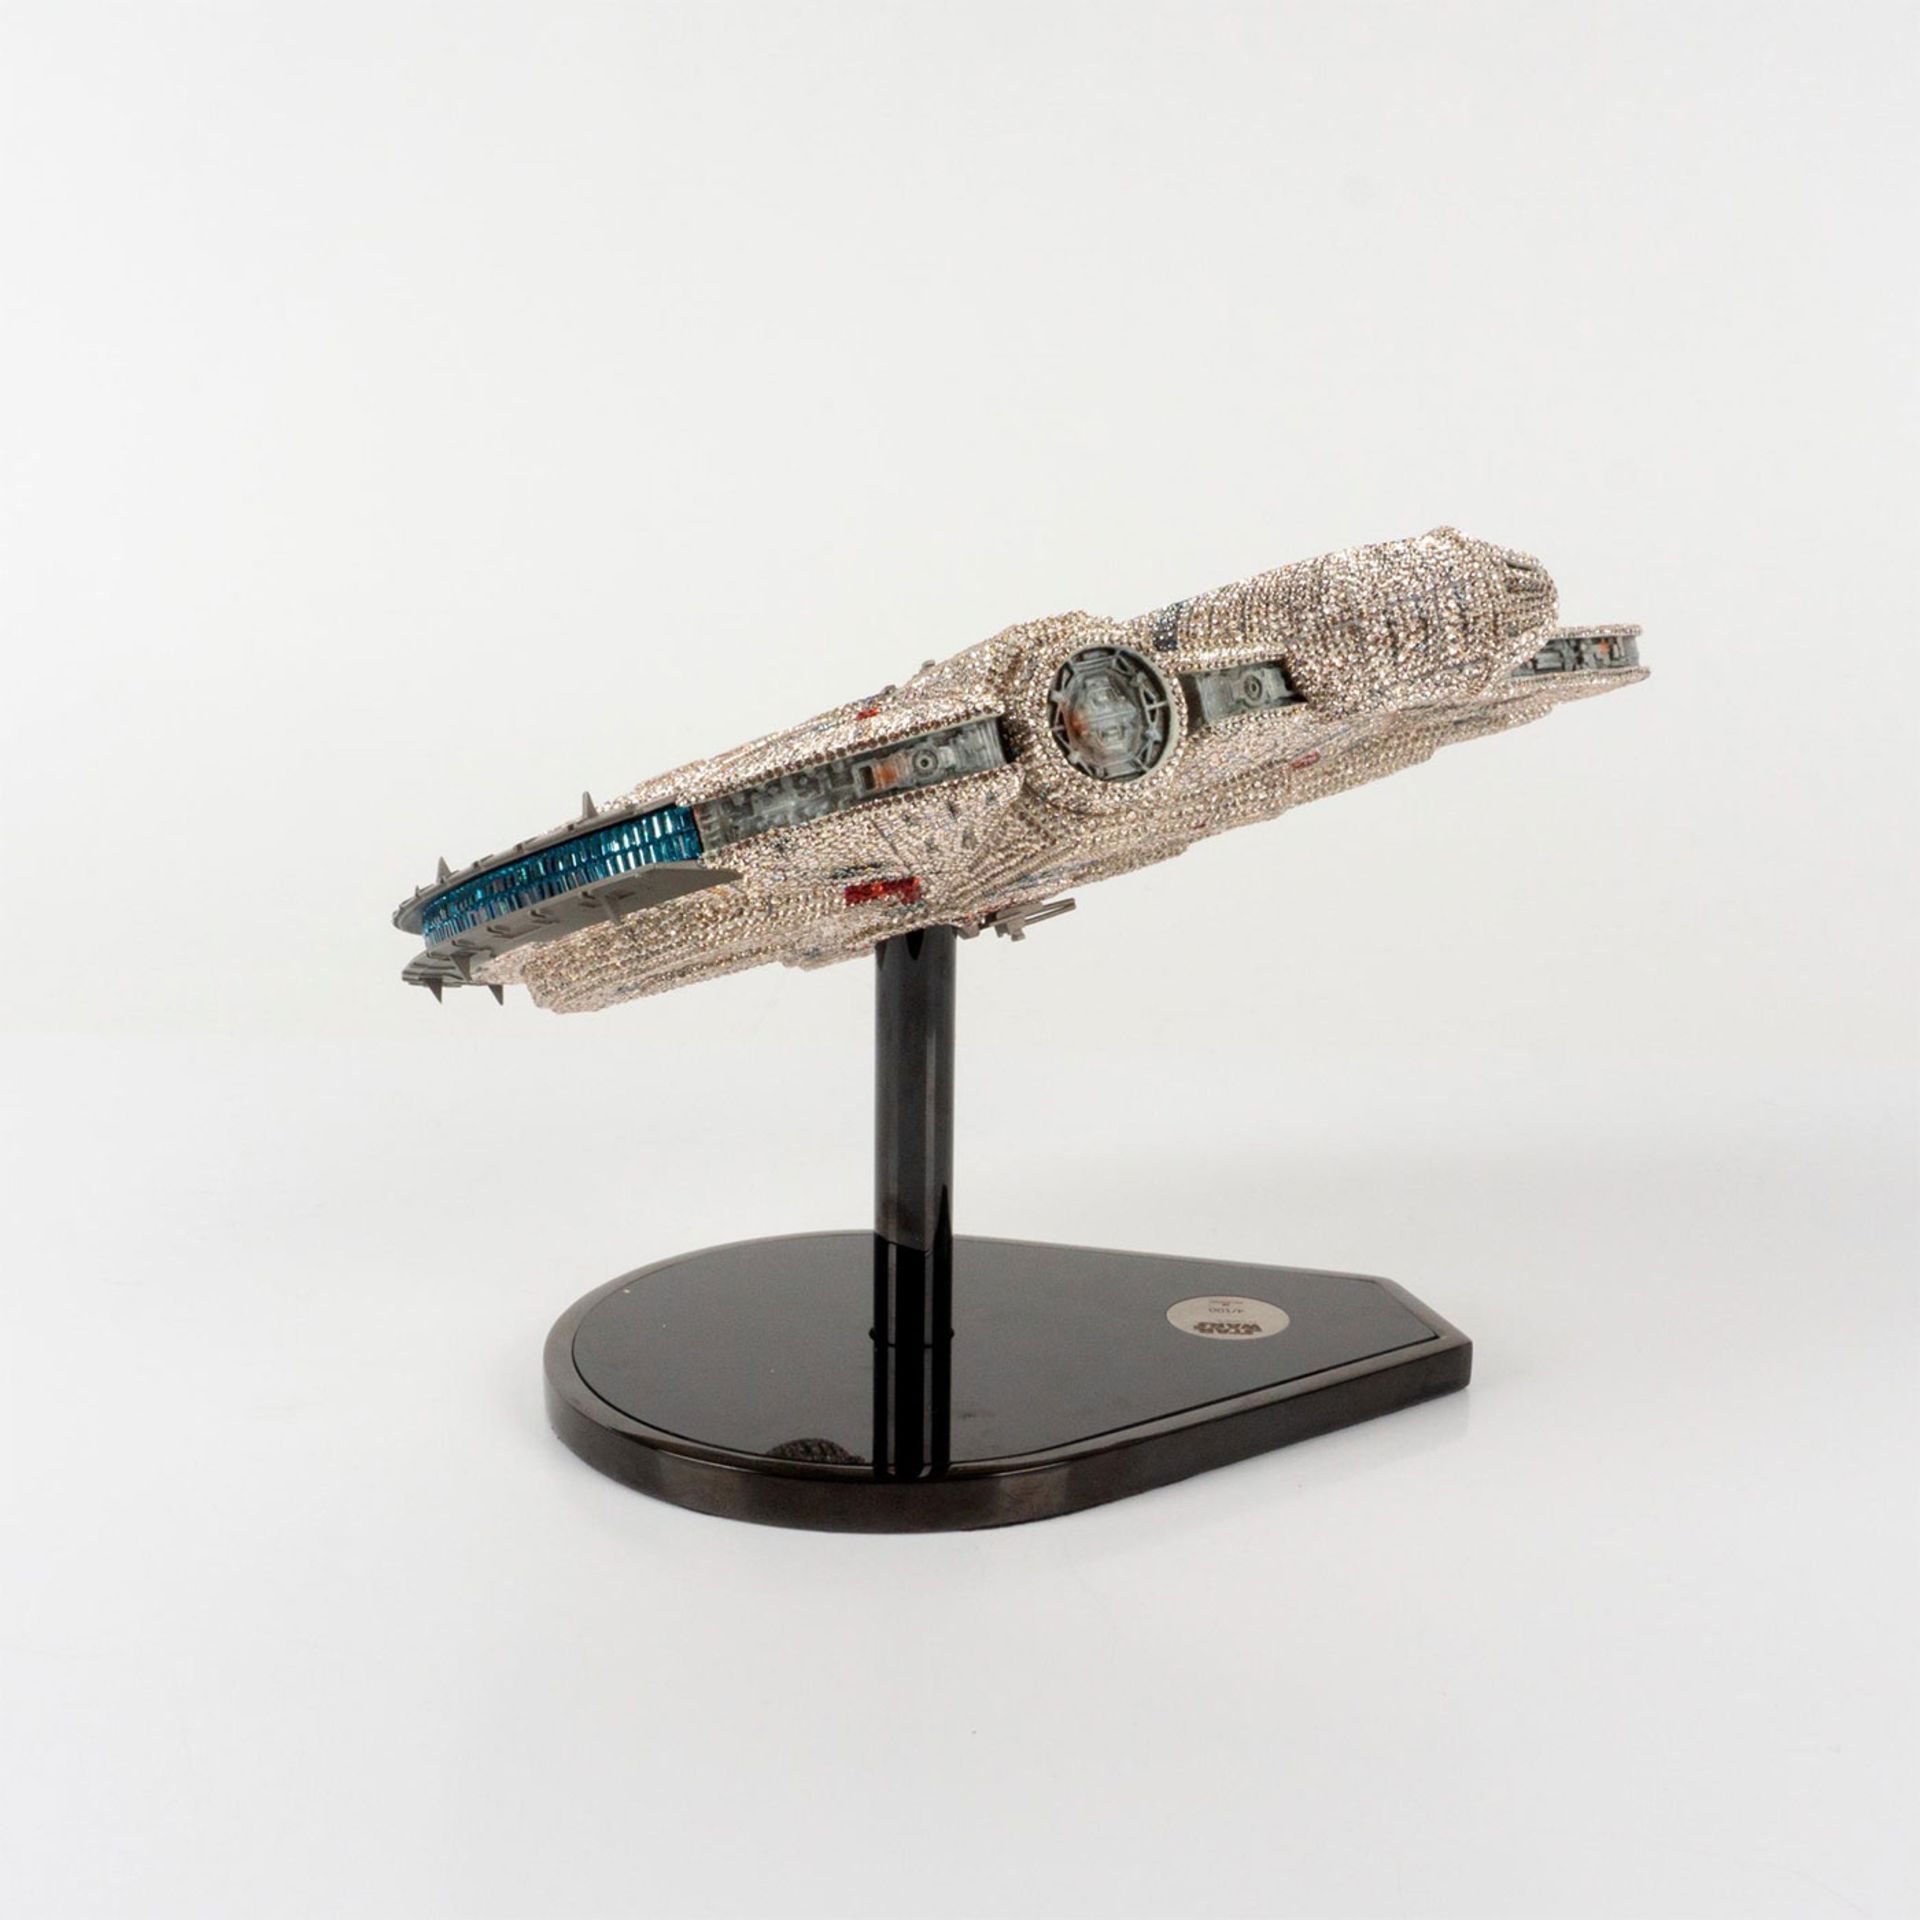 Swarovski Crystal Sculpture, Star Wars Millennium Falcon - Image 7 of 8